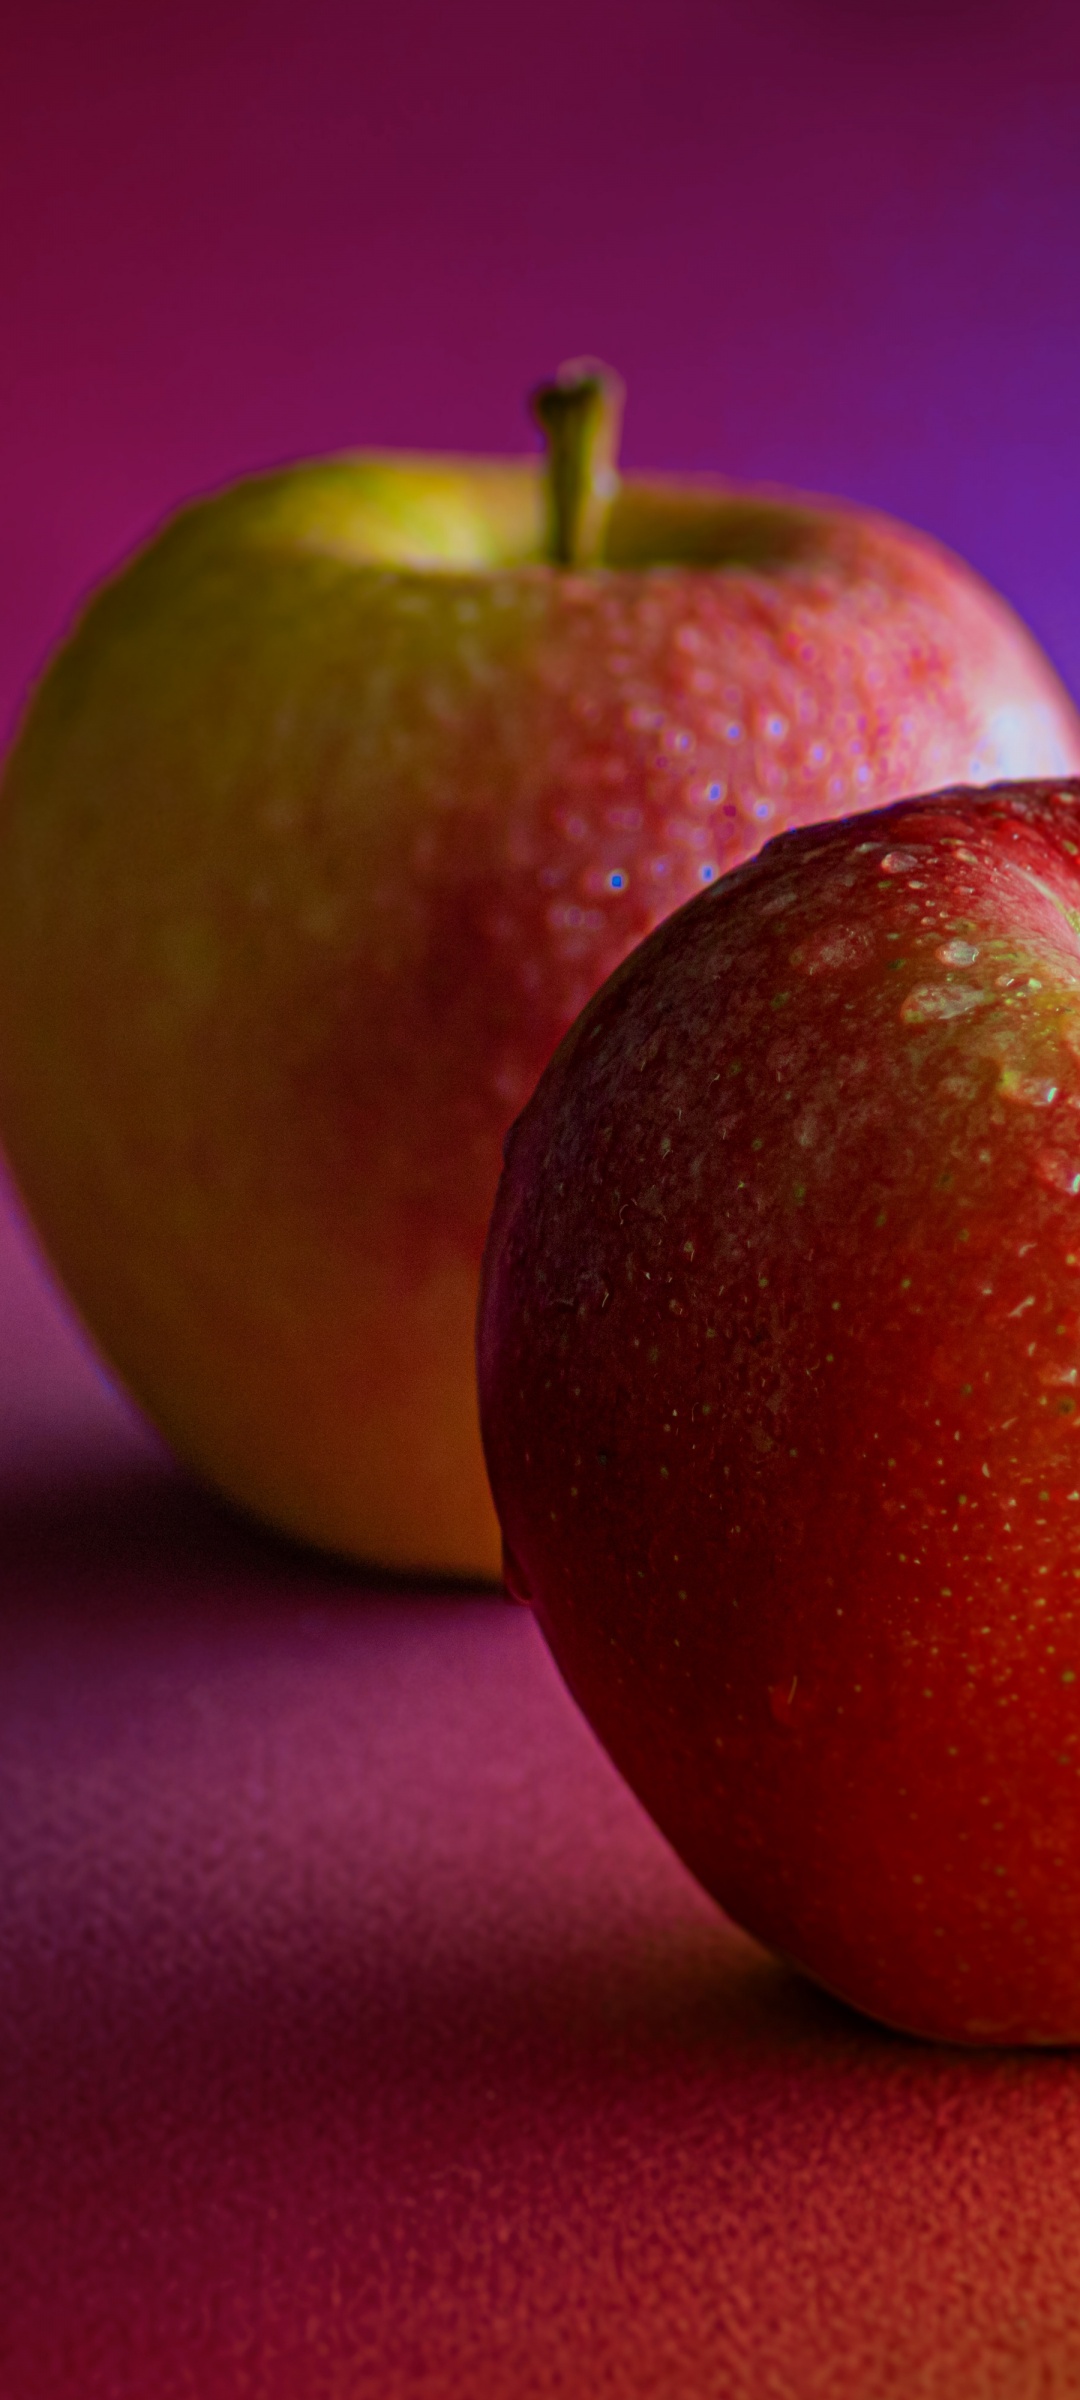 Apple Fruit Pictures  Download Free Images on Unsplash